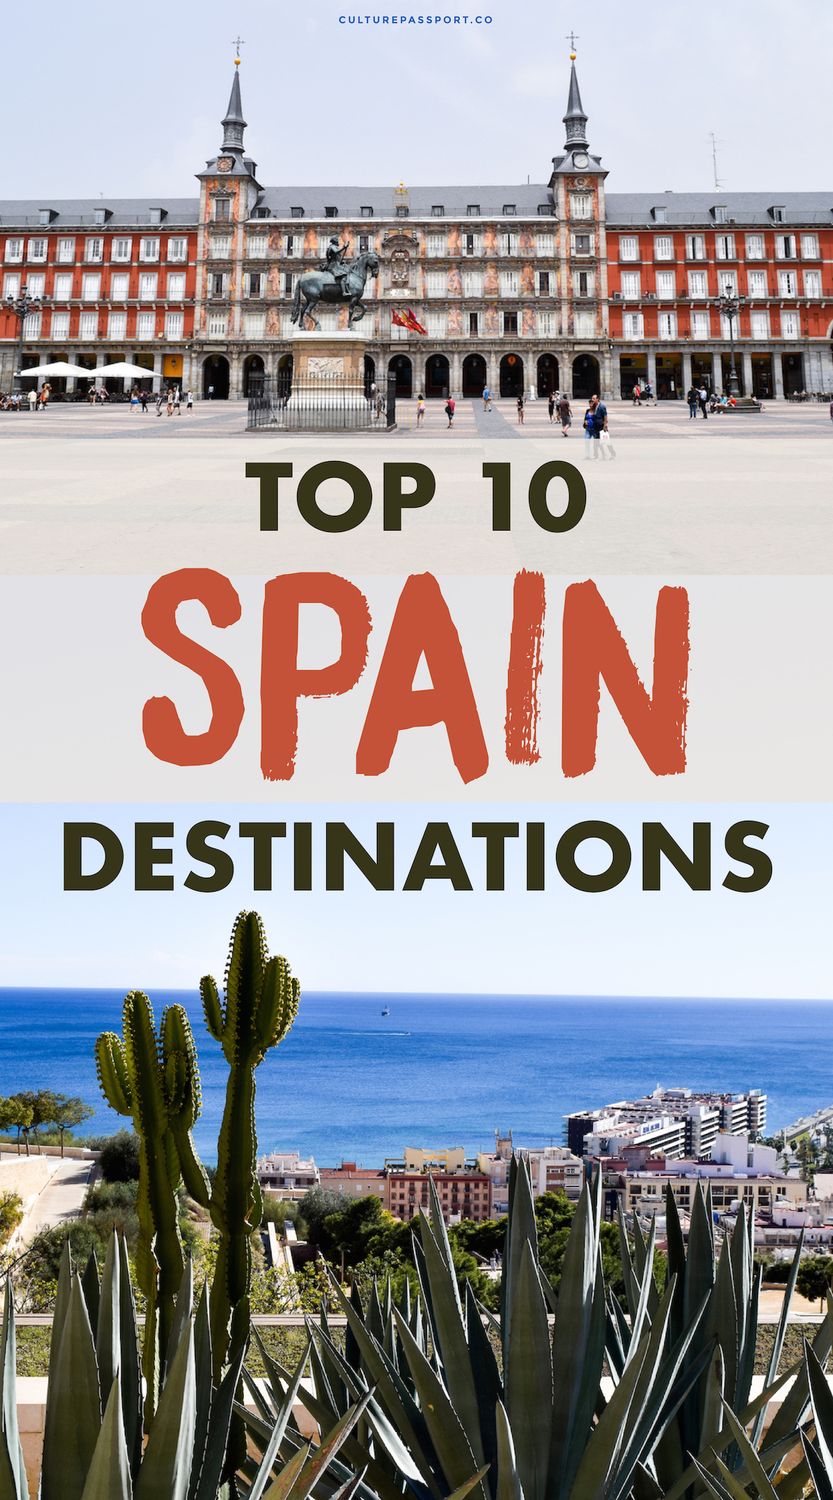 Top 10 Spain Destinations